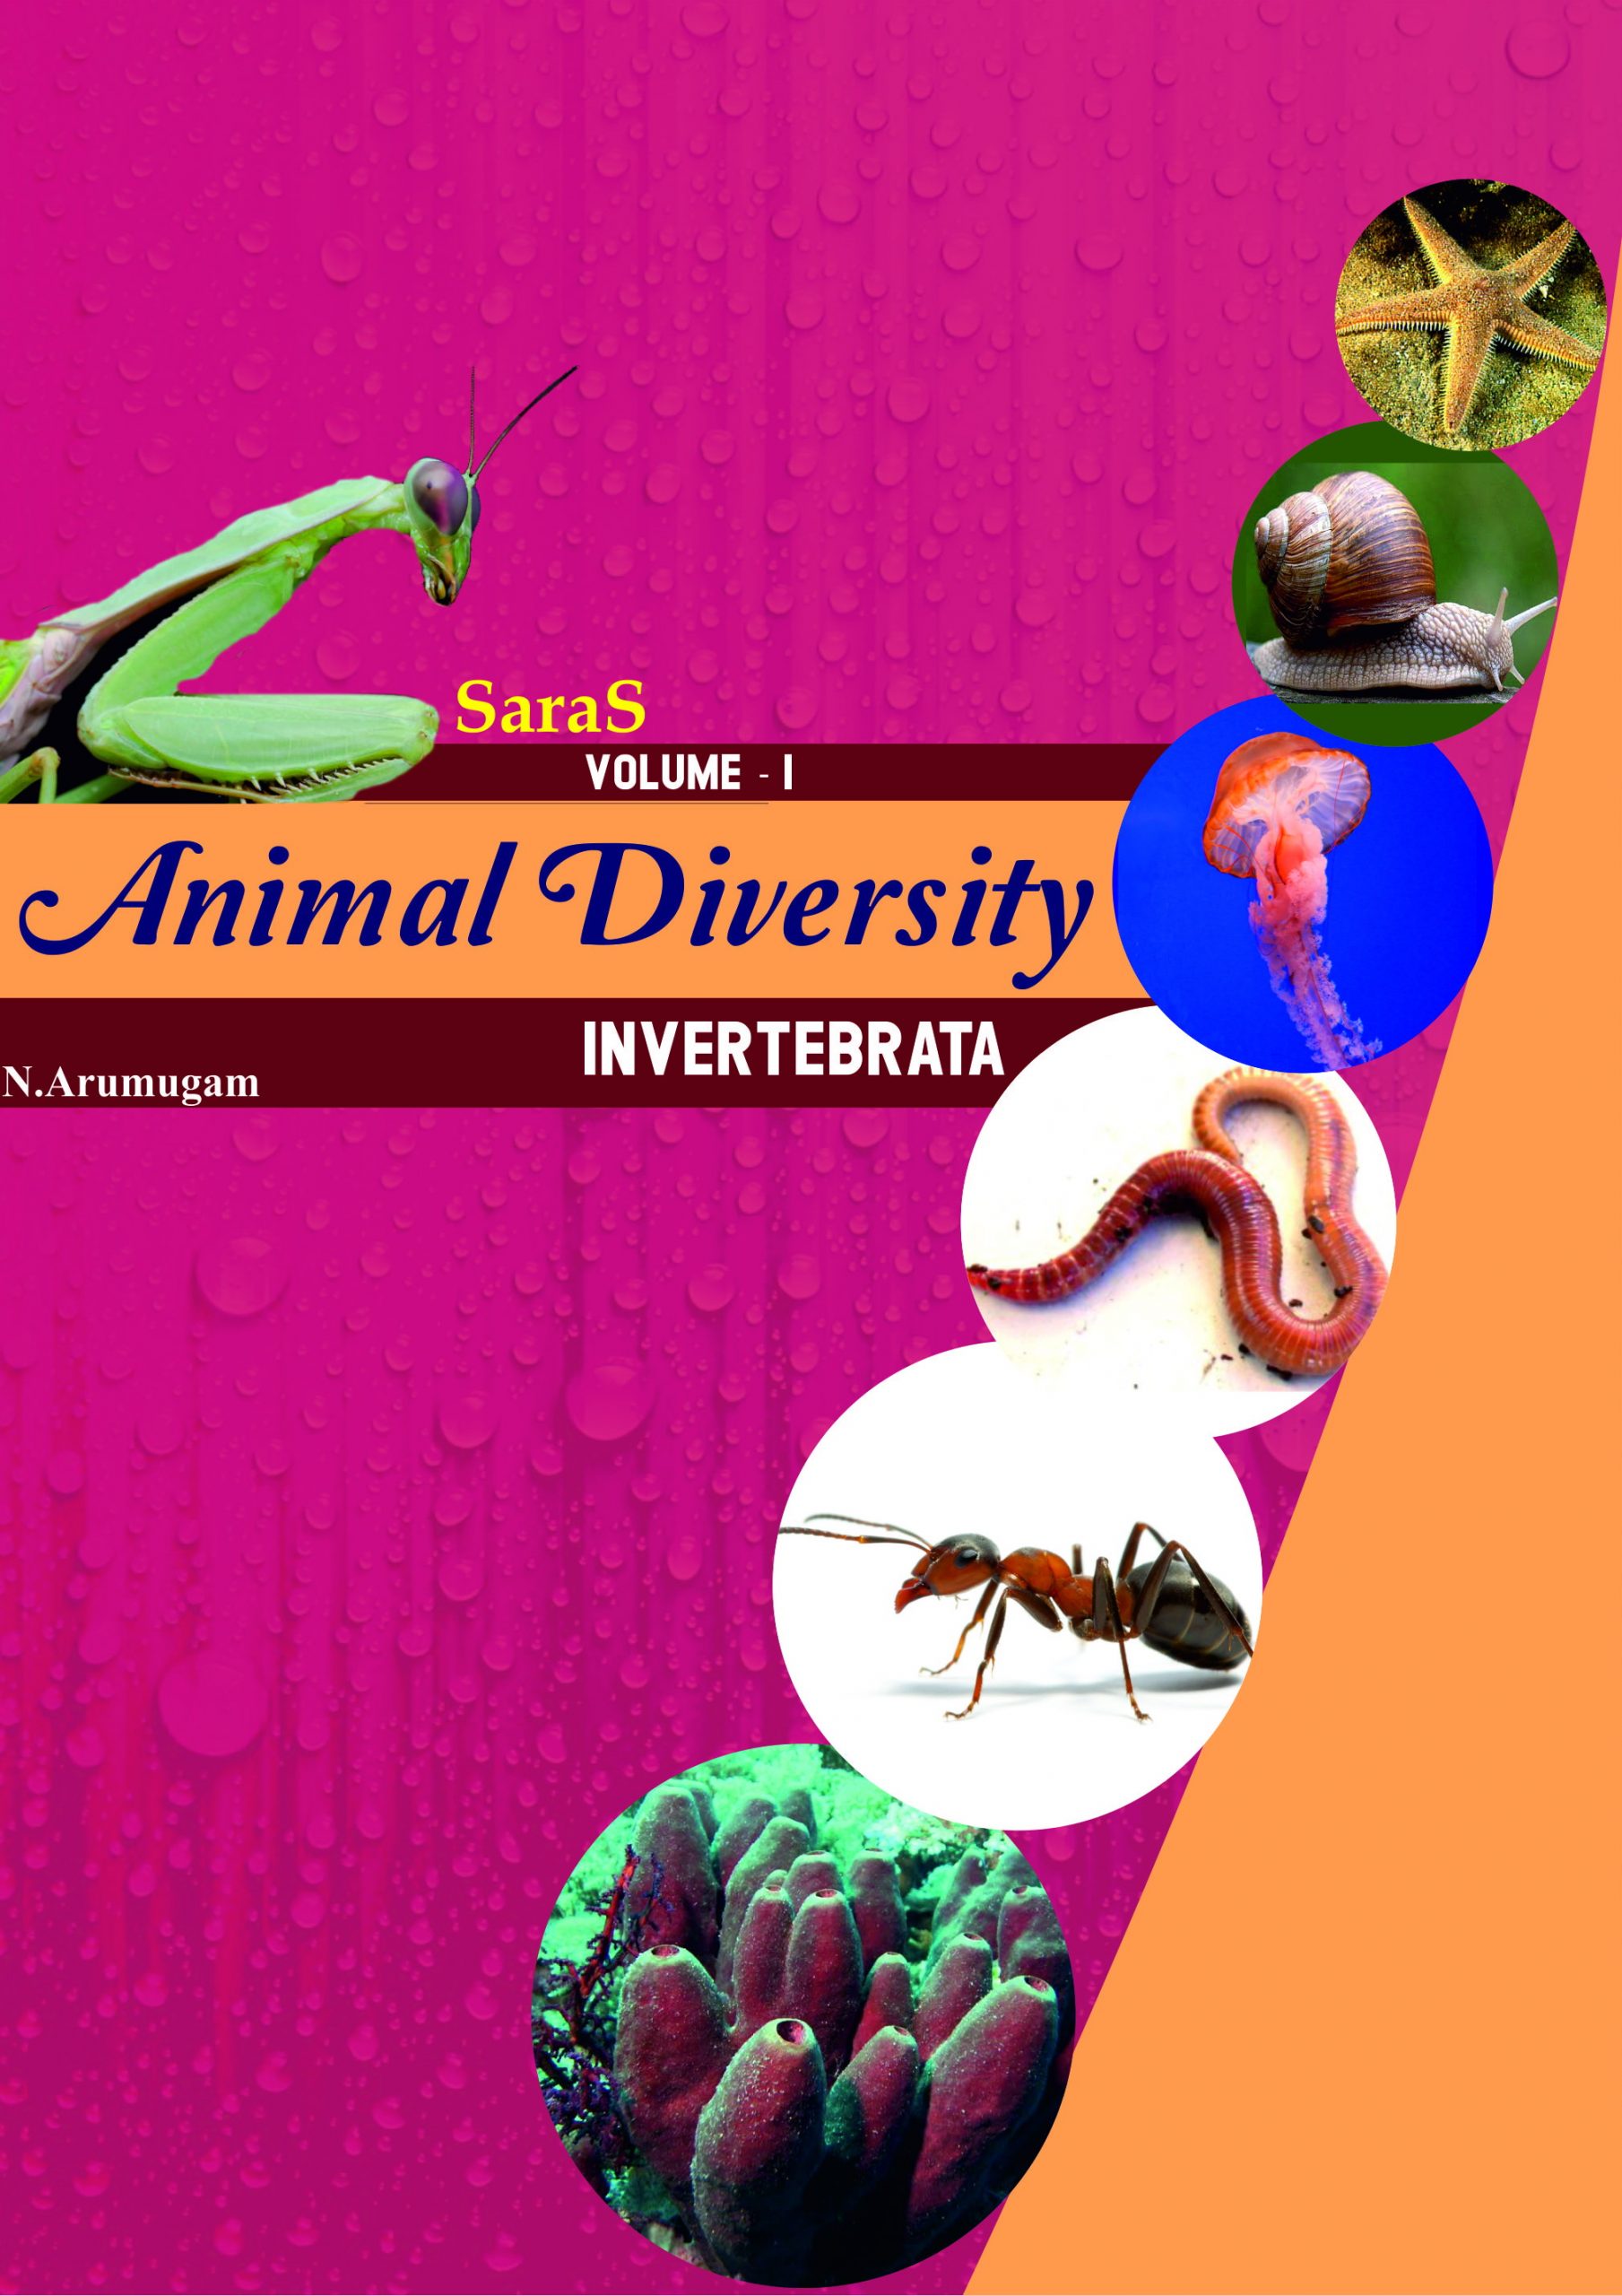 Animal Diversity - Invertebrata